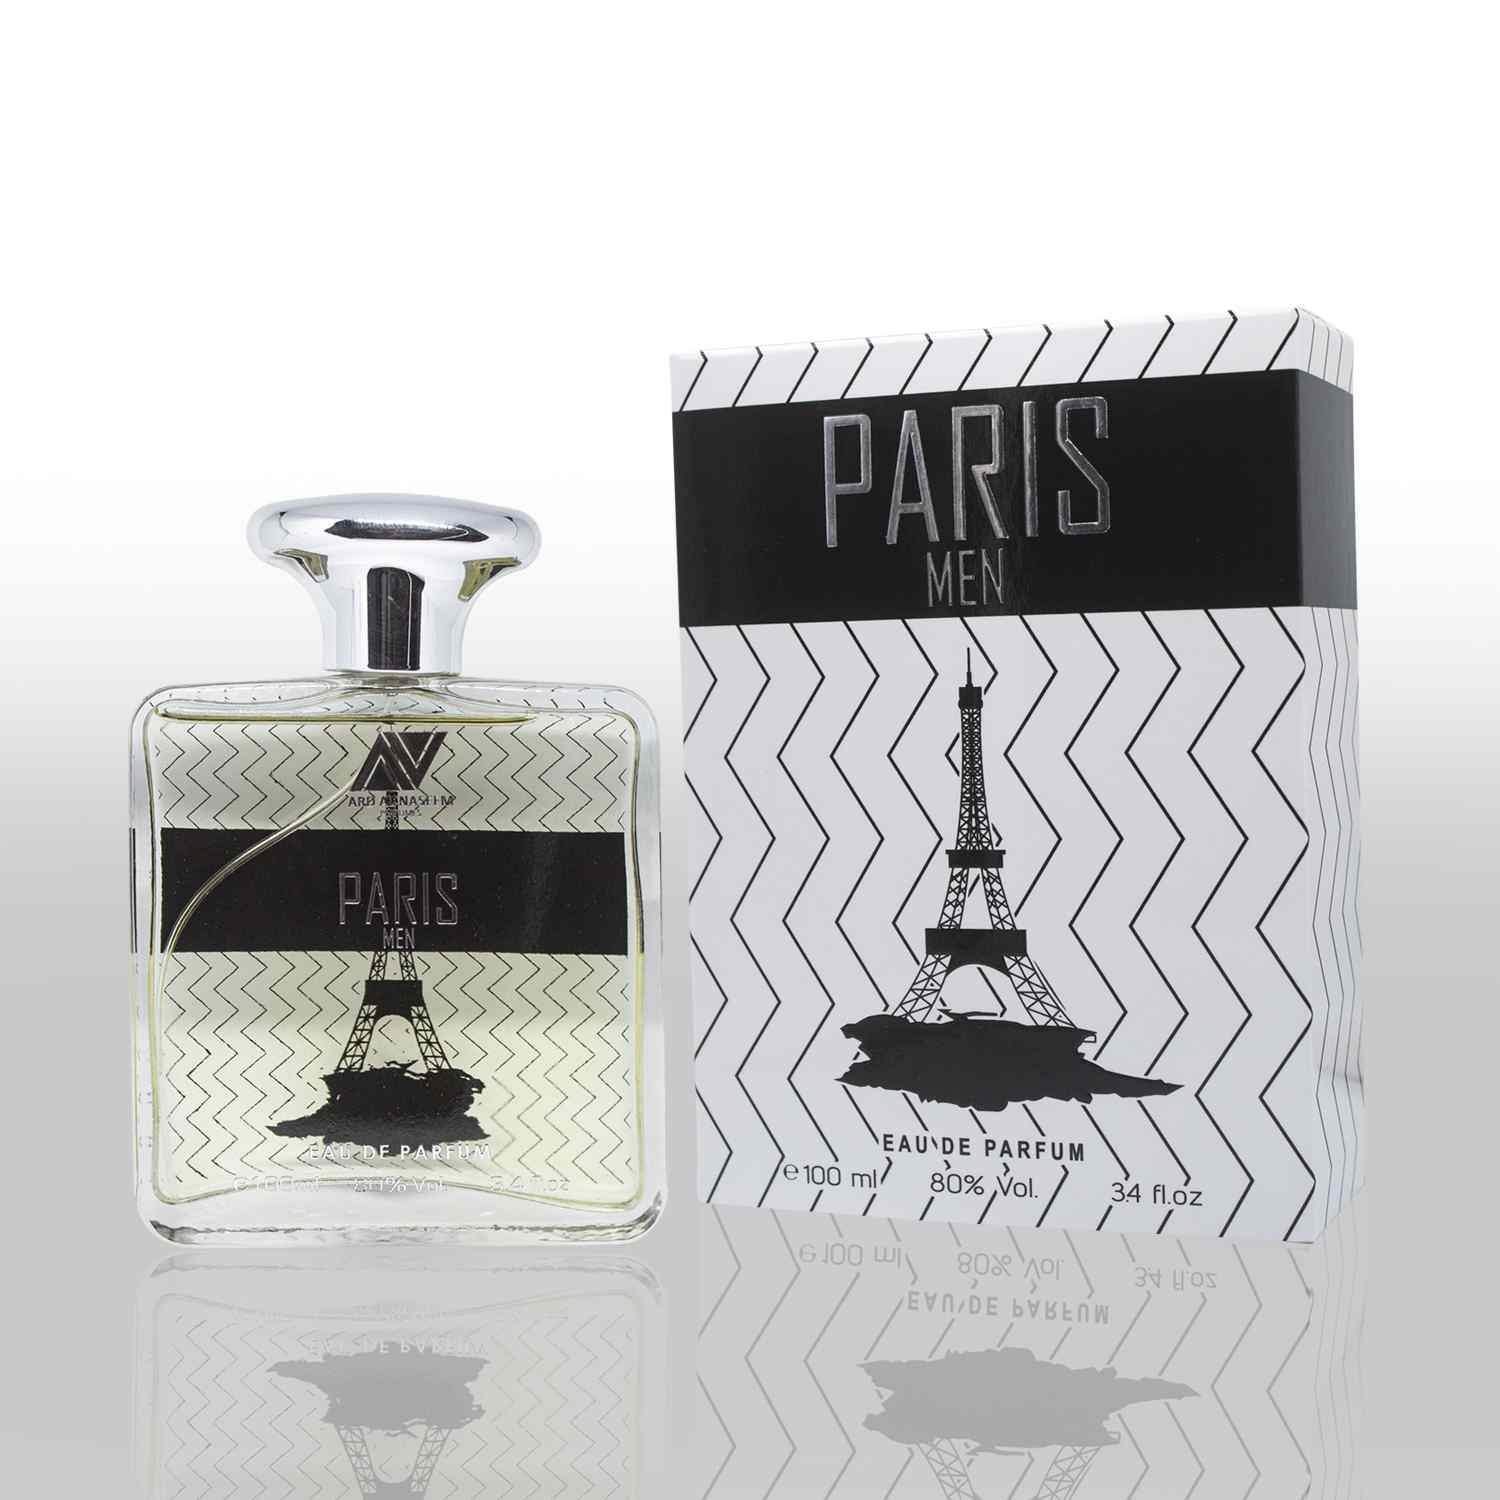 Paris Men Perfume of ARD PERFUMES